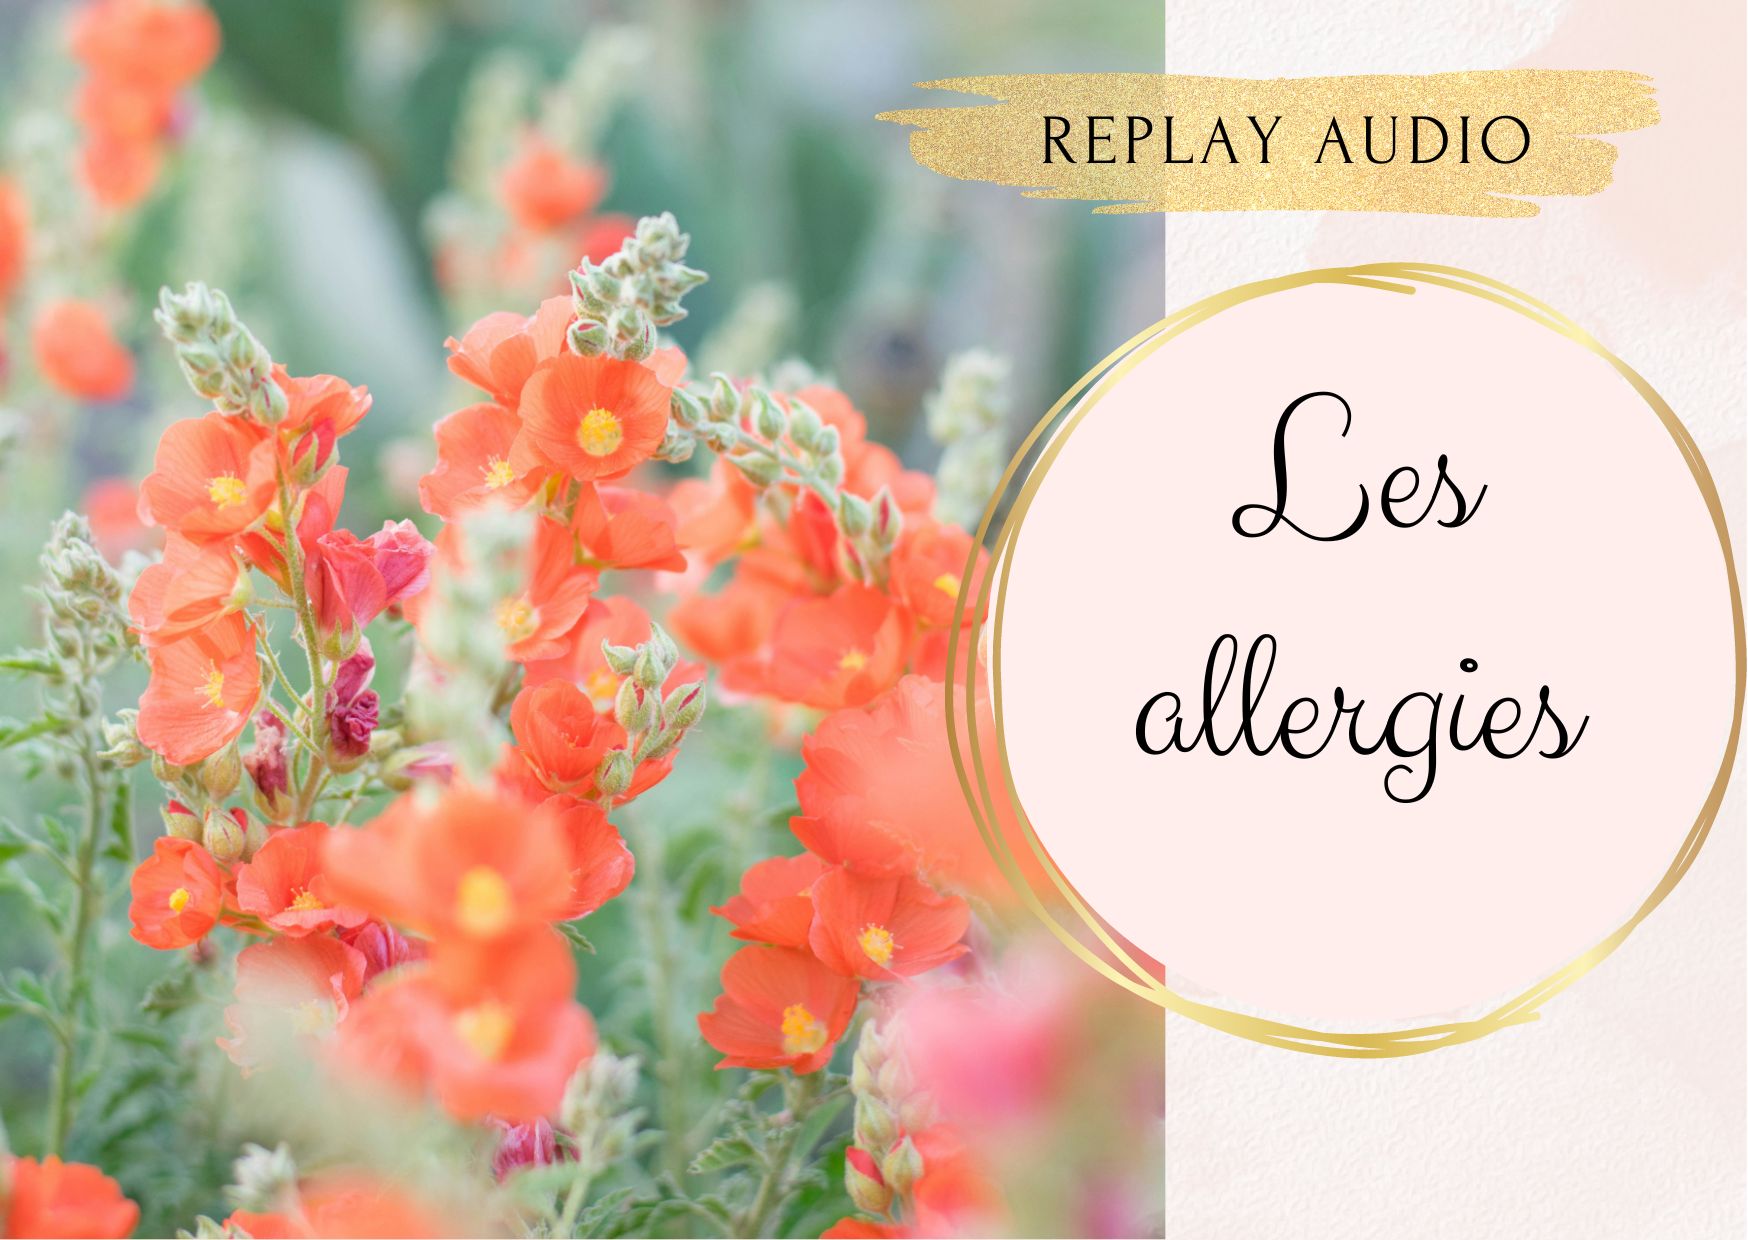 Soin "Allergies" - audio